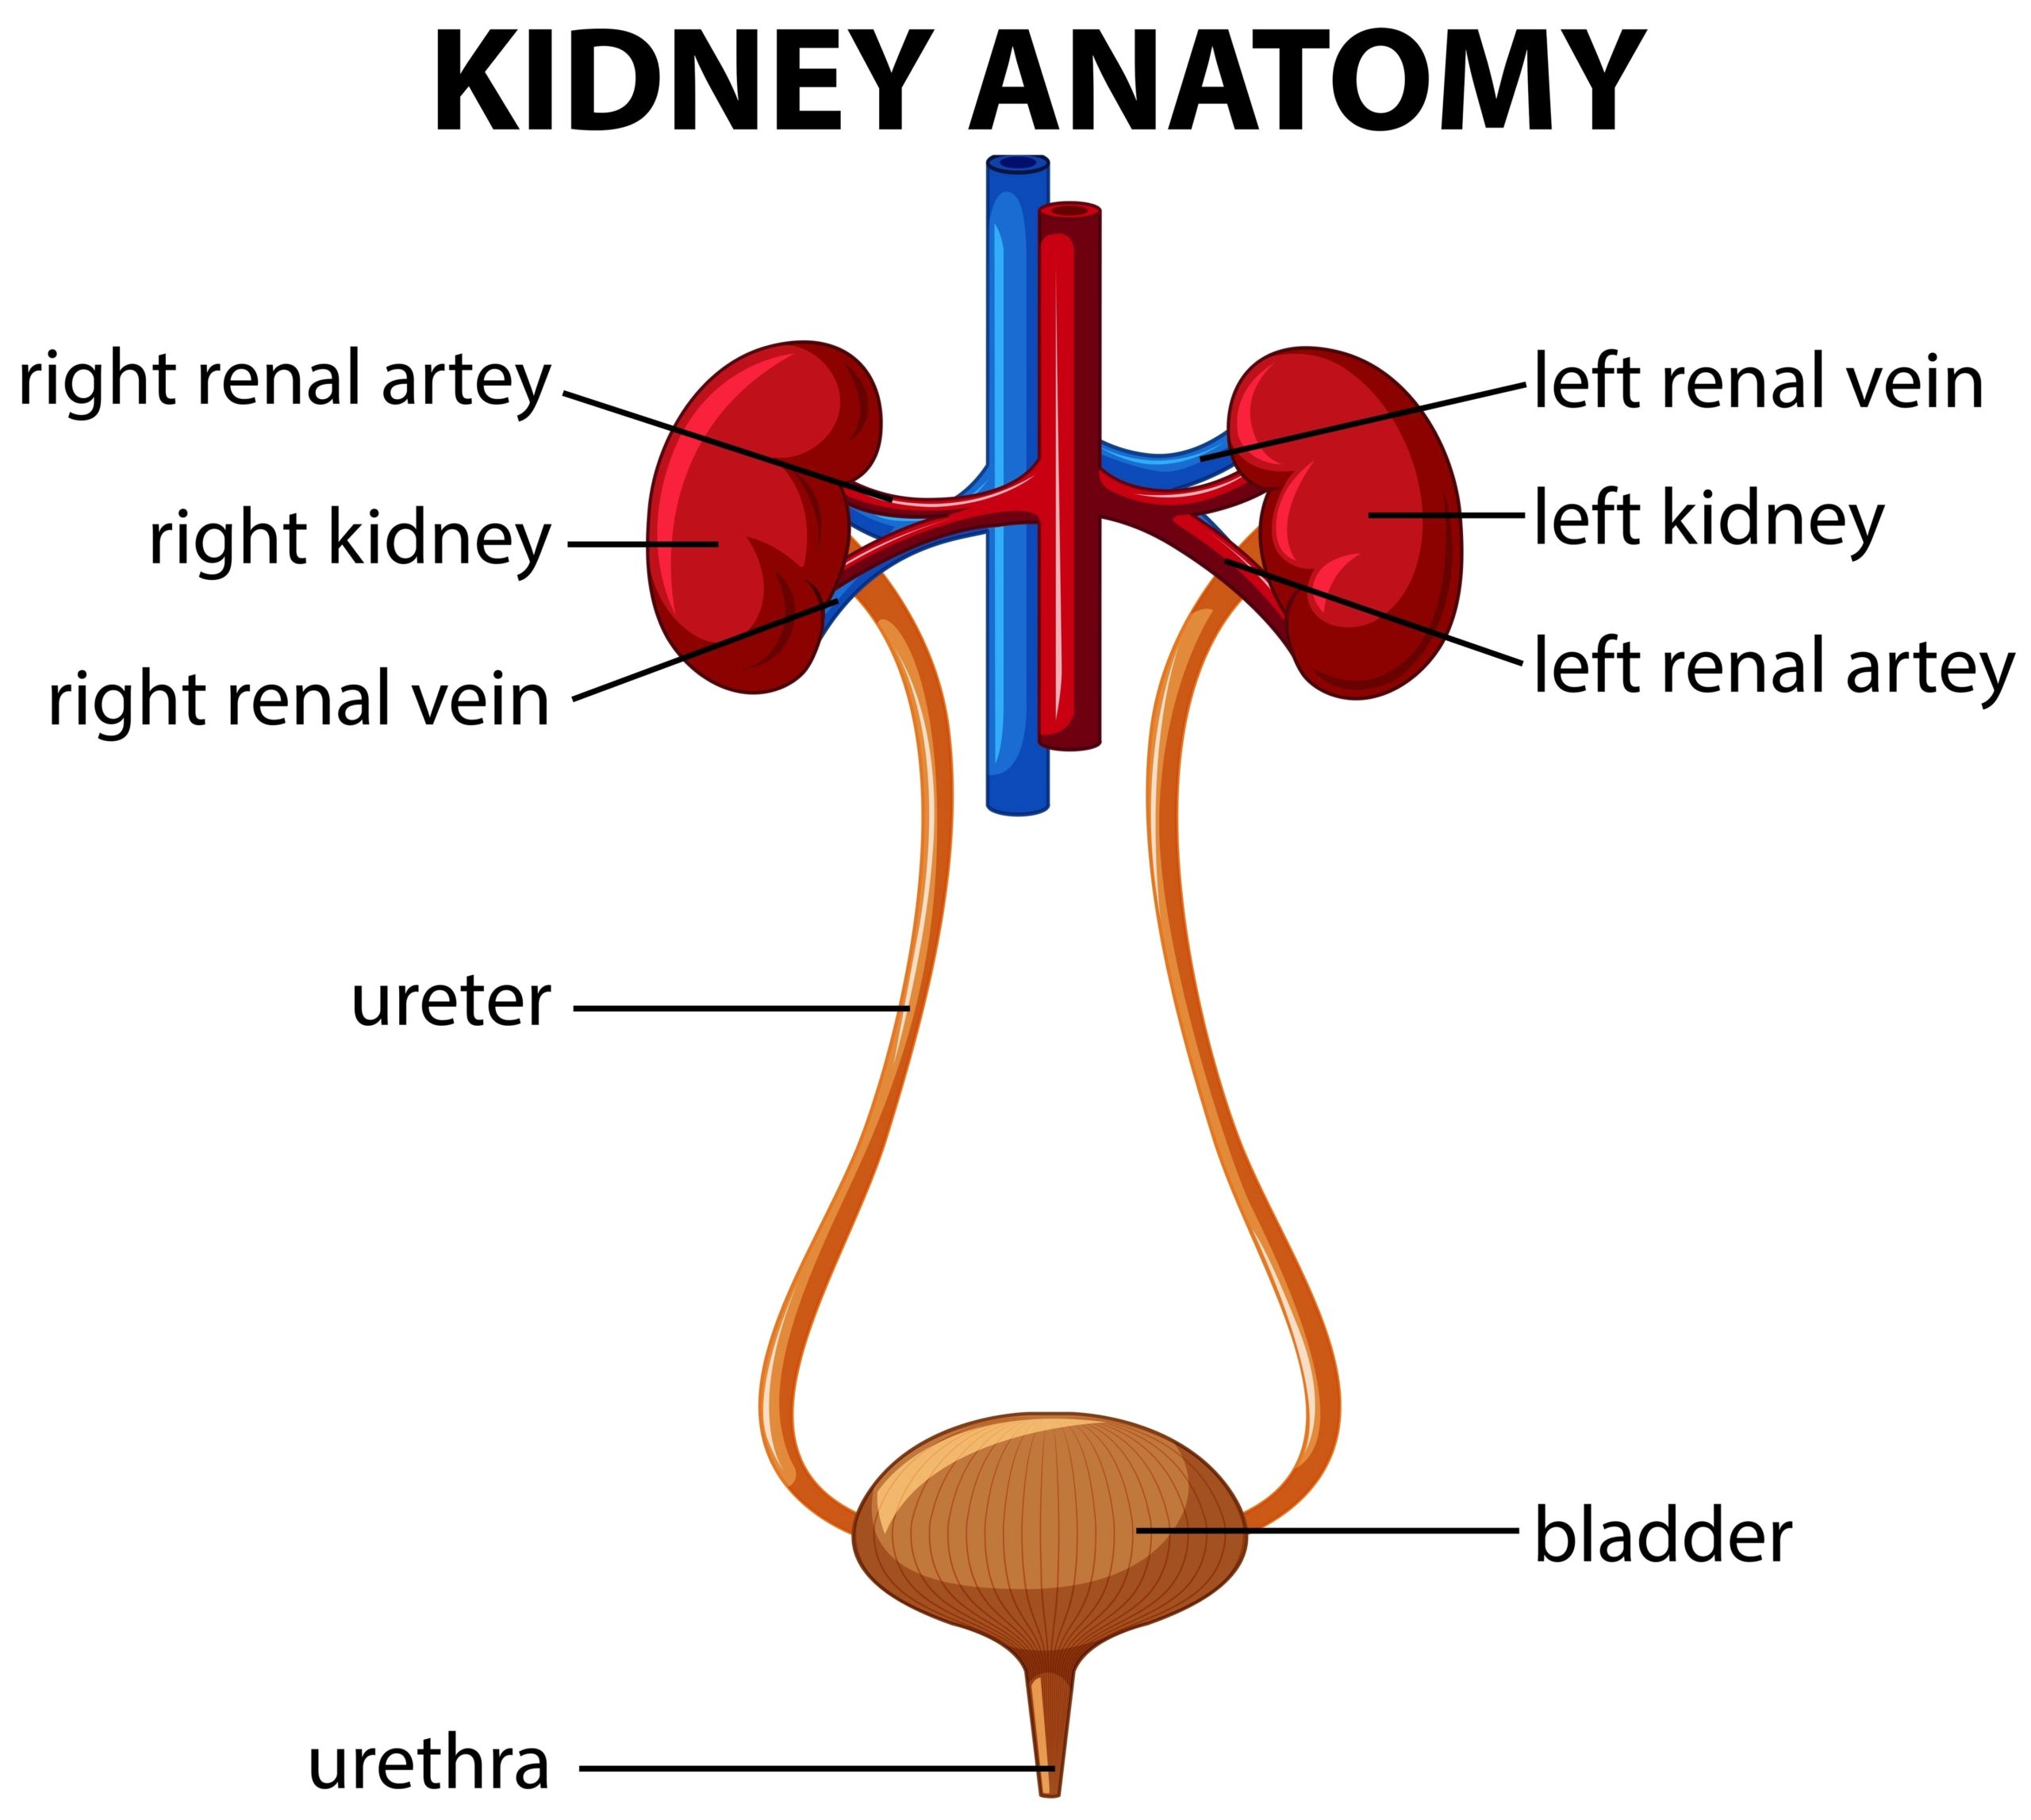 Human kidney anatomy diagram scaled